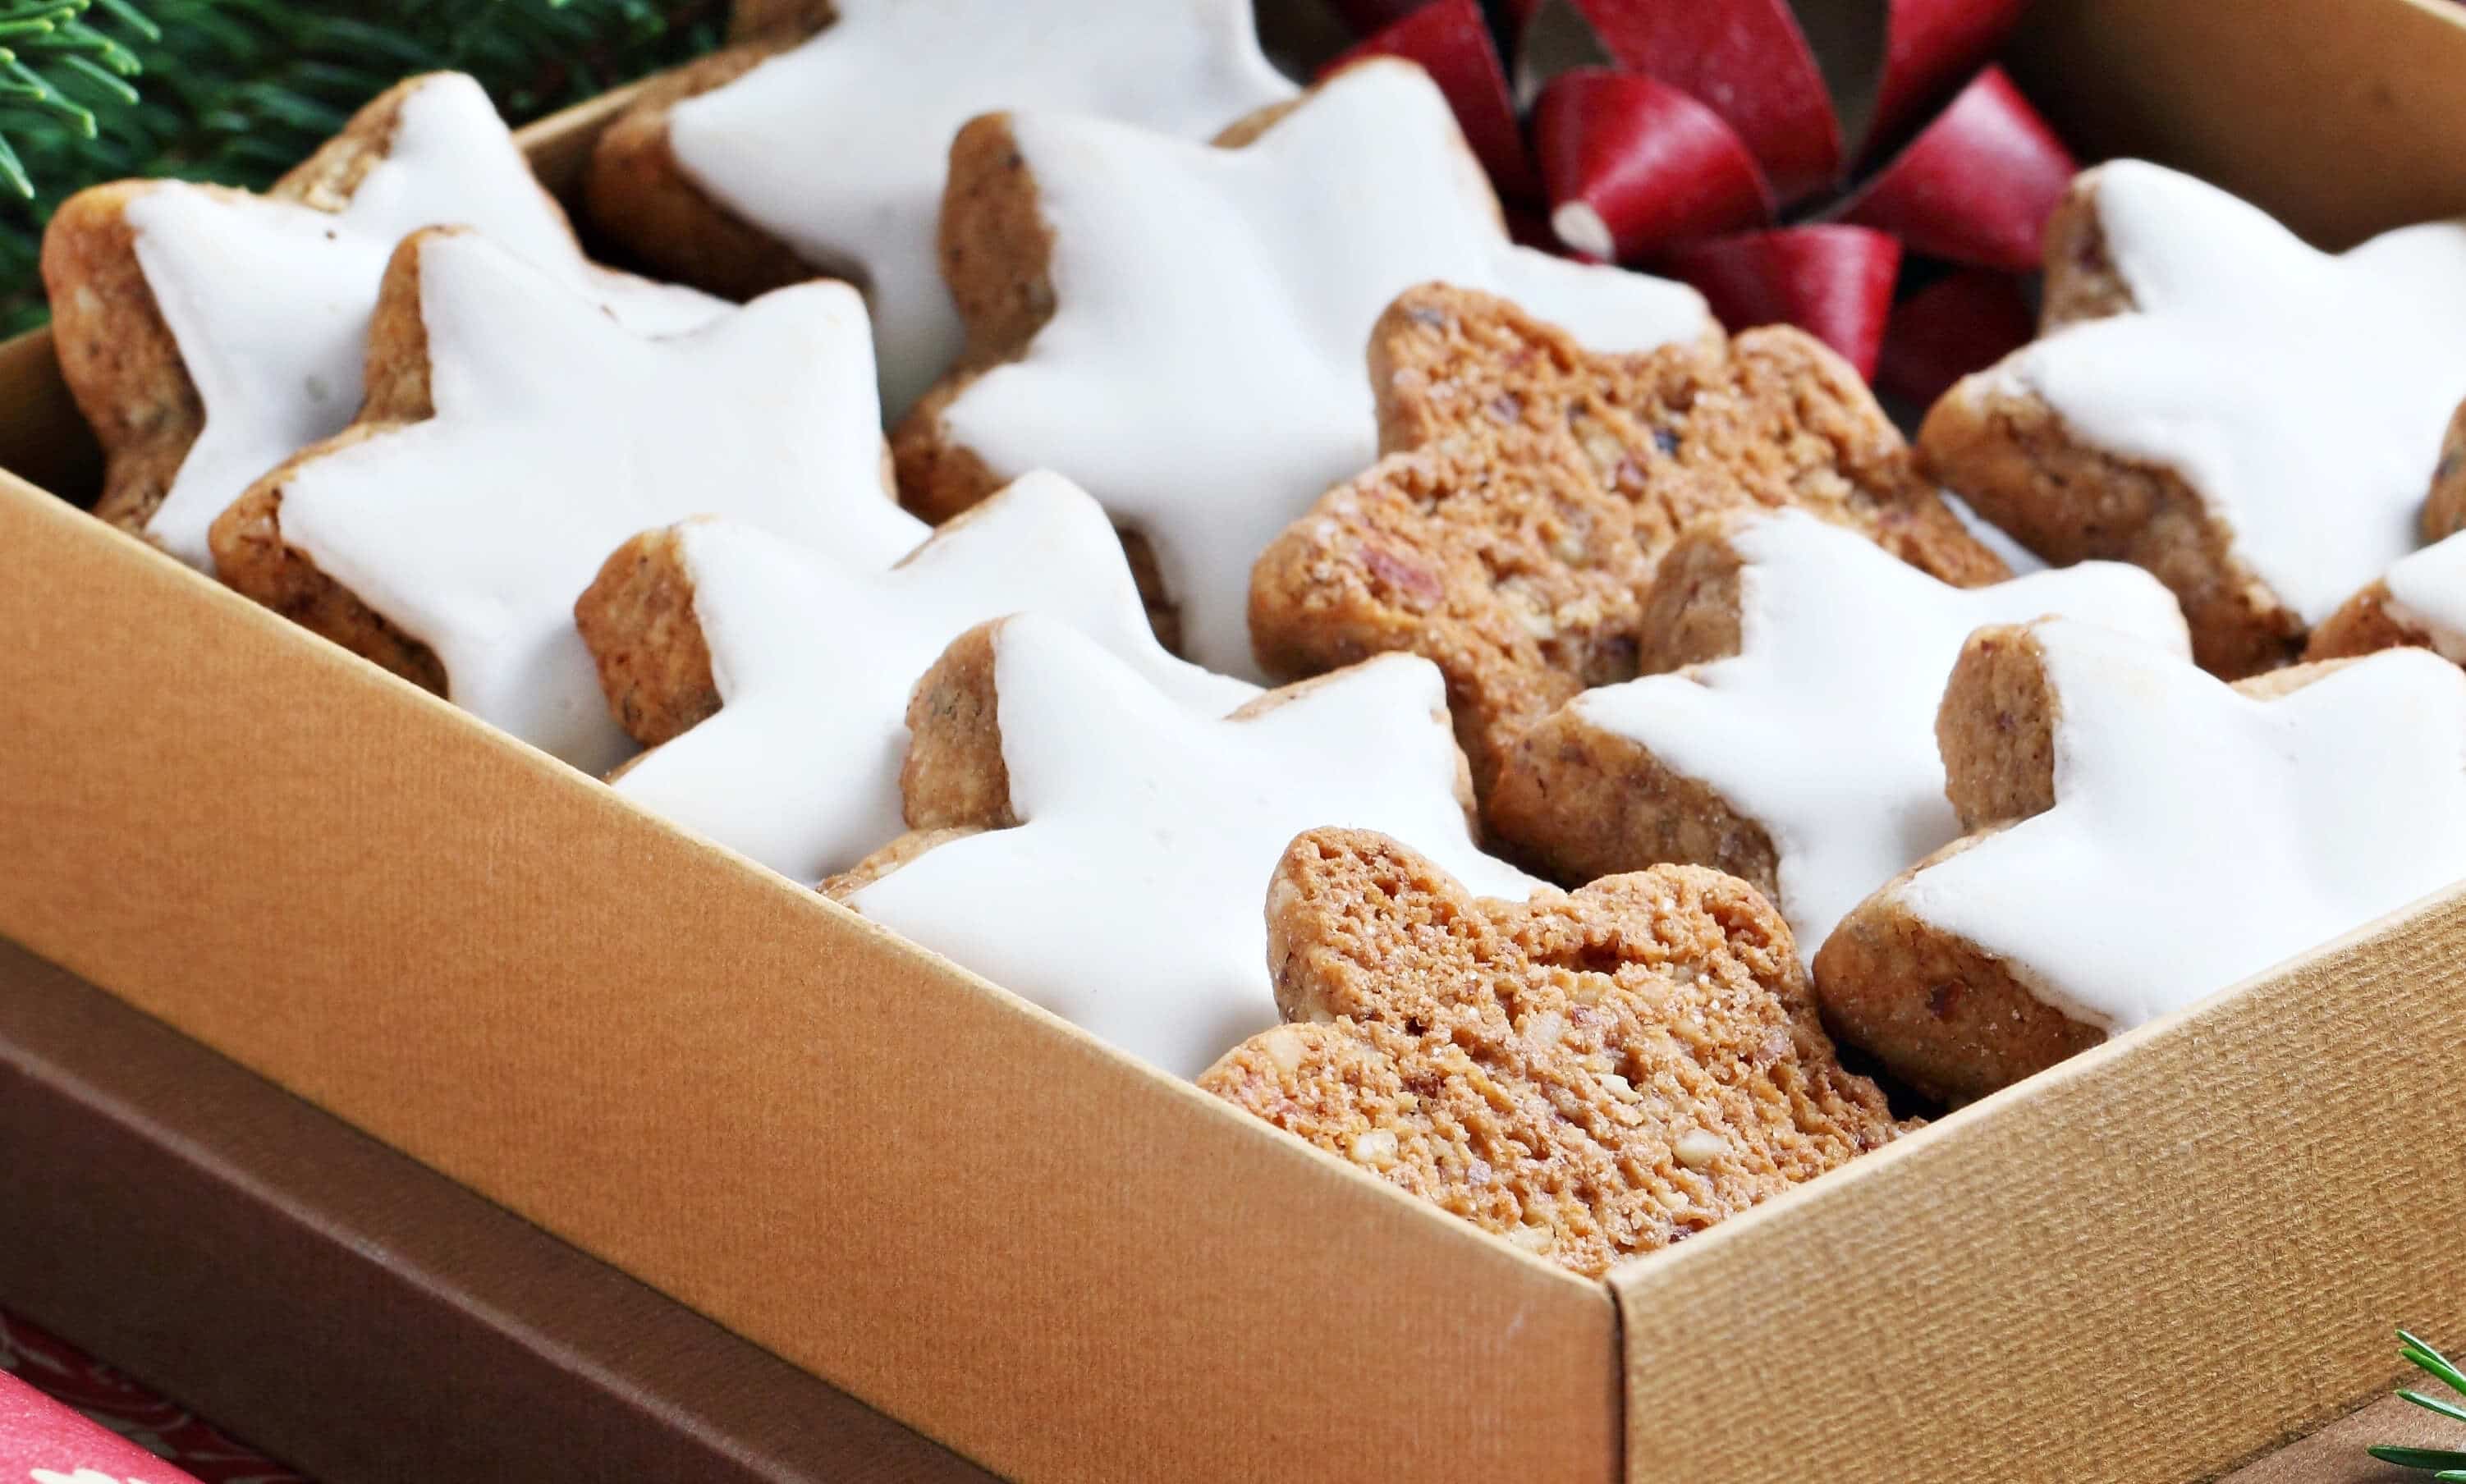 german zimtsterne recipe baking cookies almonds hazelnuts cinnamon star traditional authentic germany christmas holidays